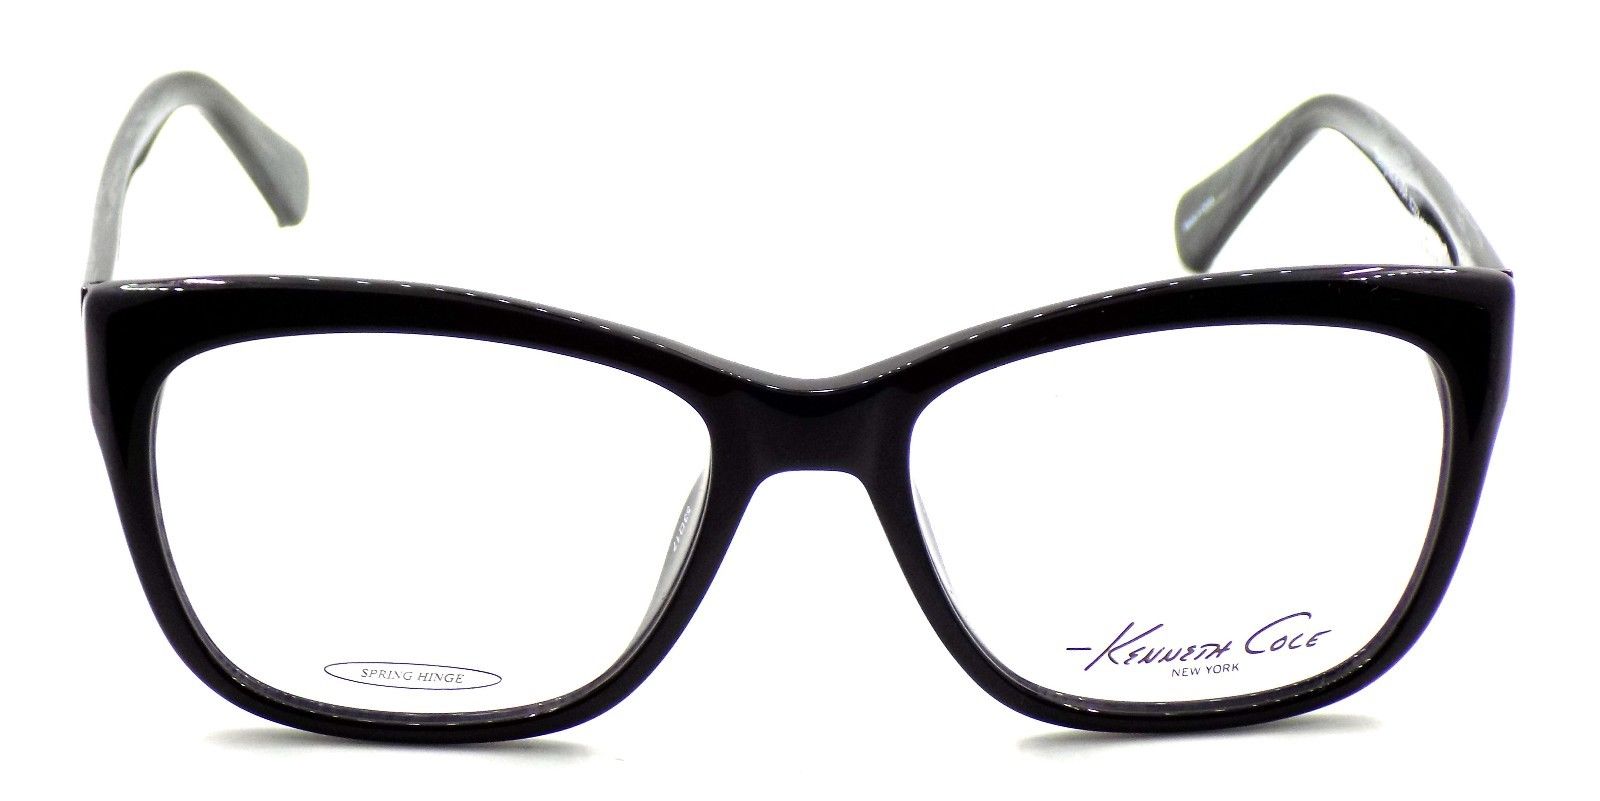 2-Kenneth Cole NY KC0224 001 Women's Eyeglasses Frames 53-17-140 Shiny Black +CASE-664689652761-IKSpecs